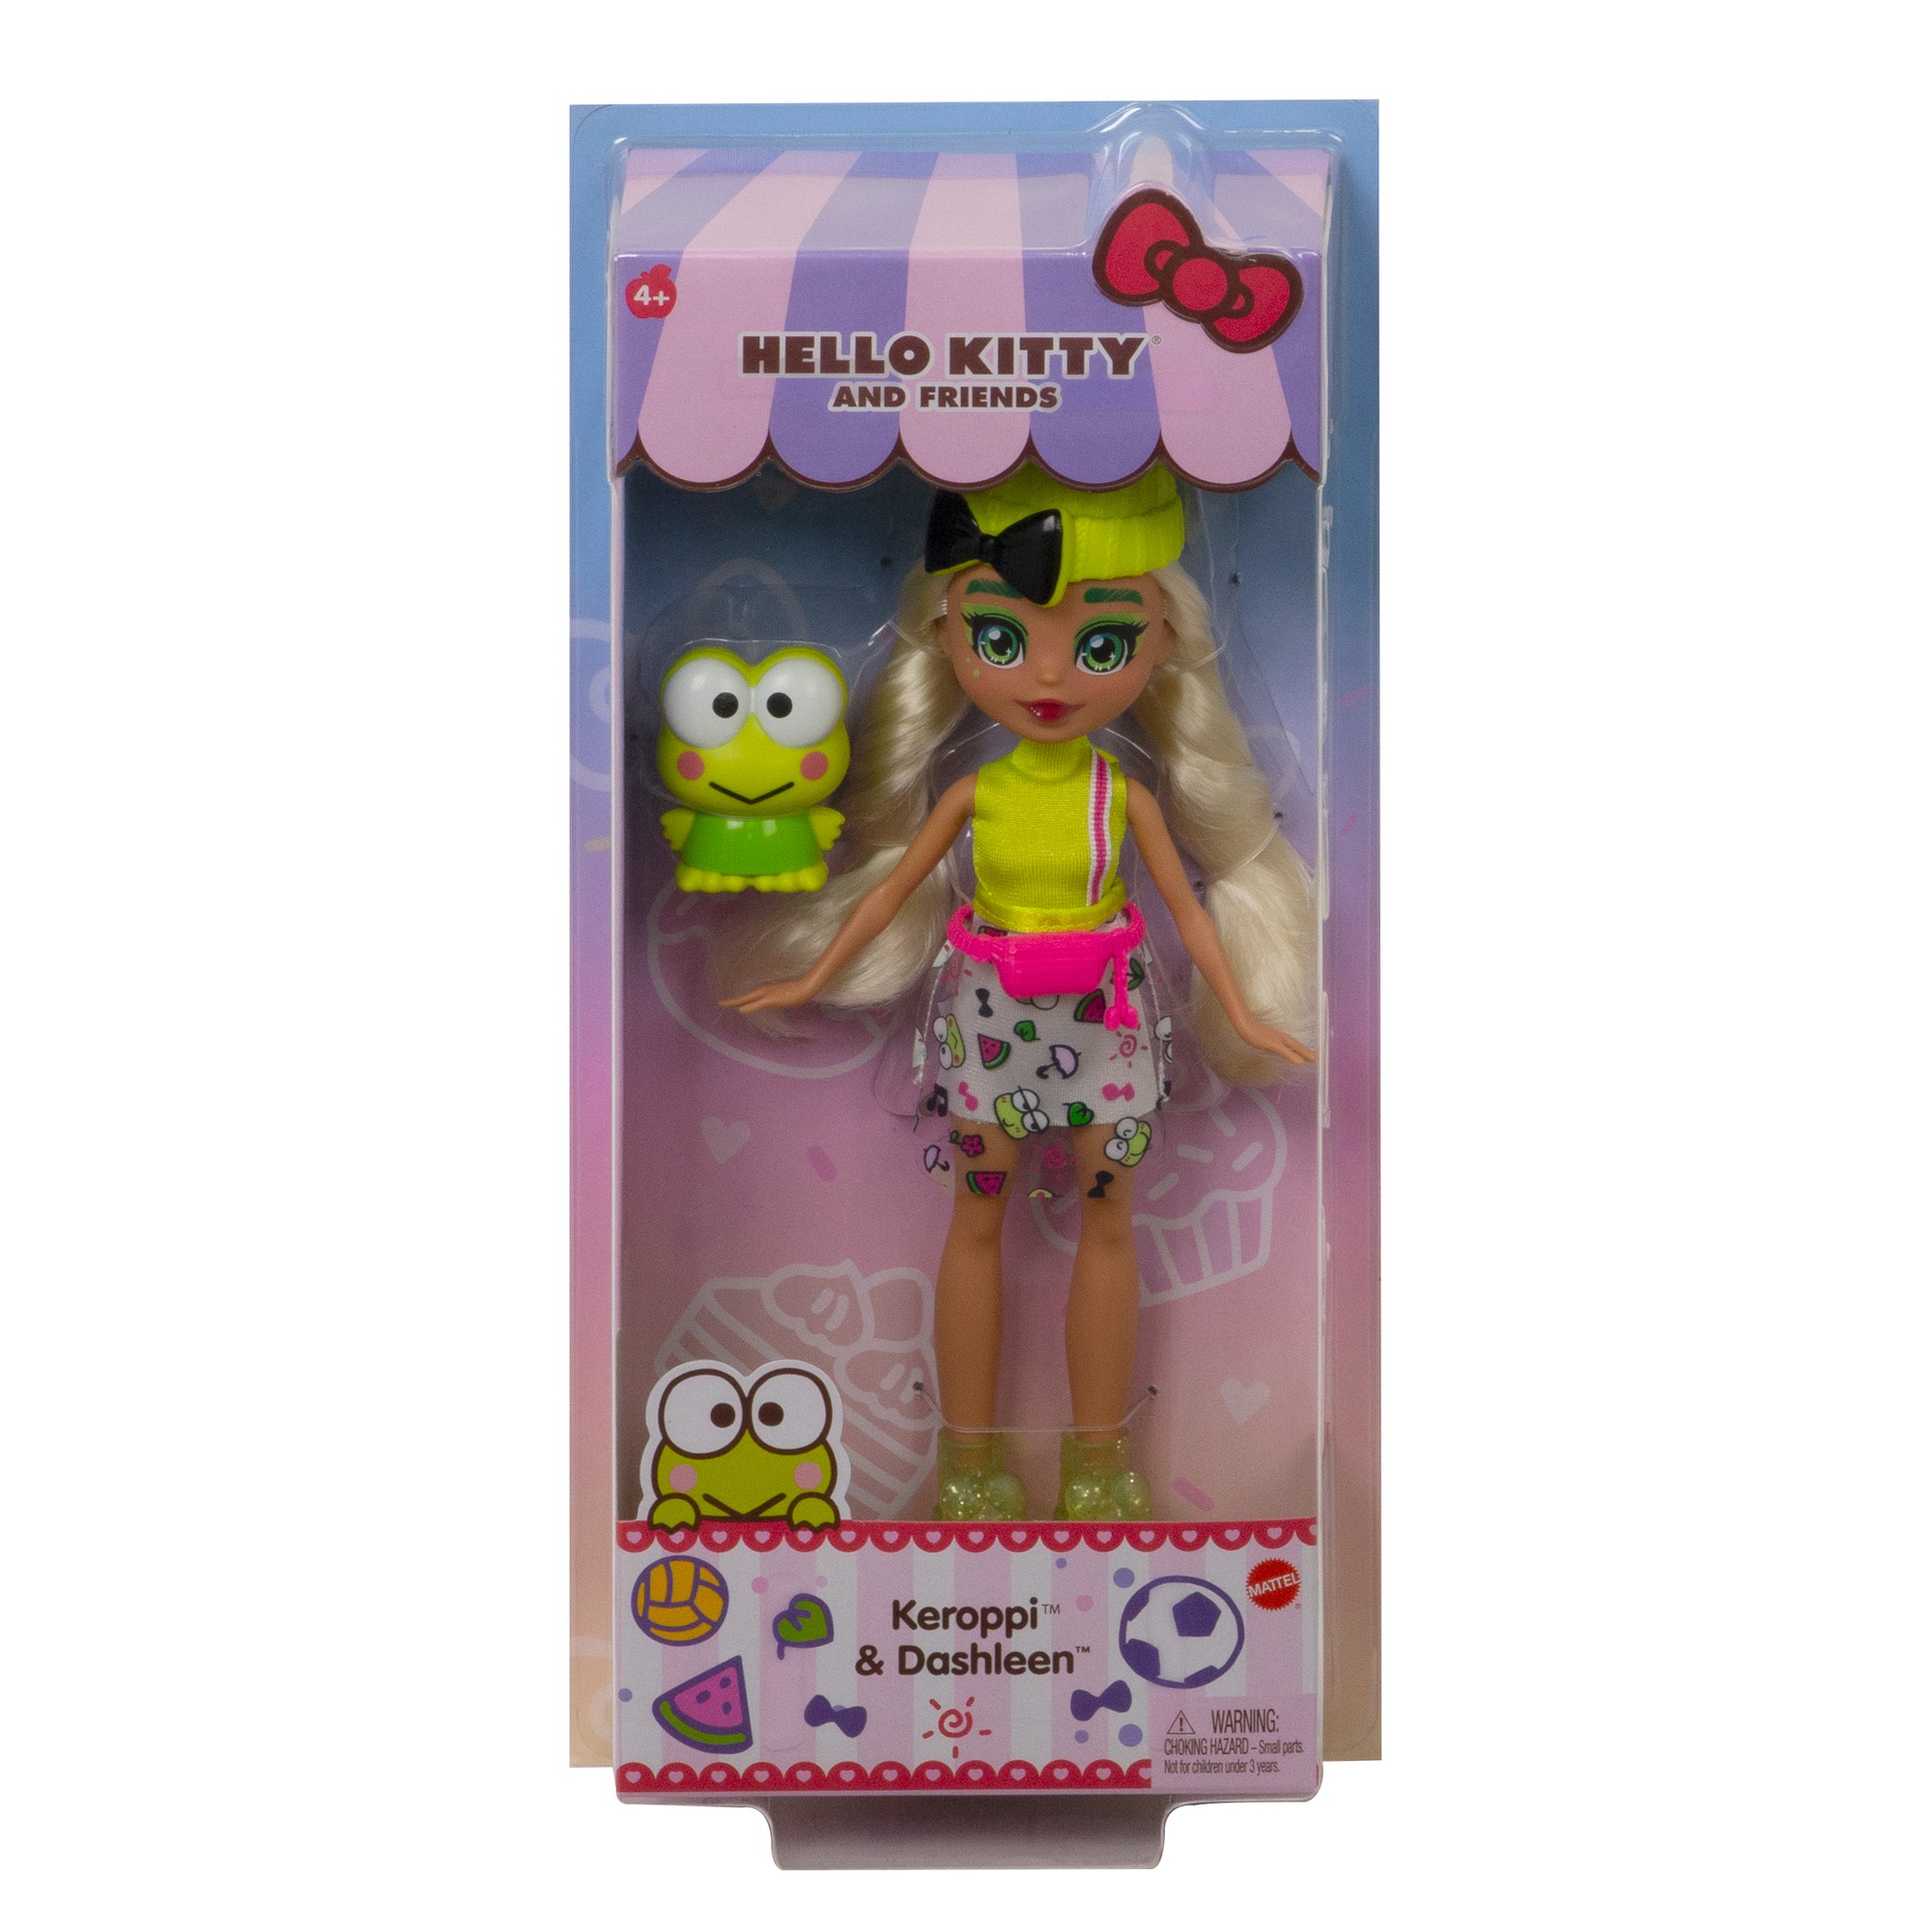 Hello Kitty & Friends Gymberly TM Doll